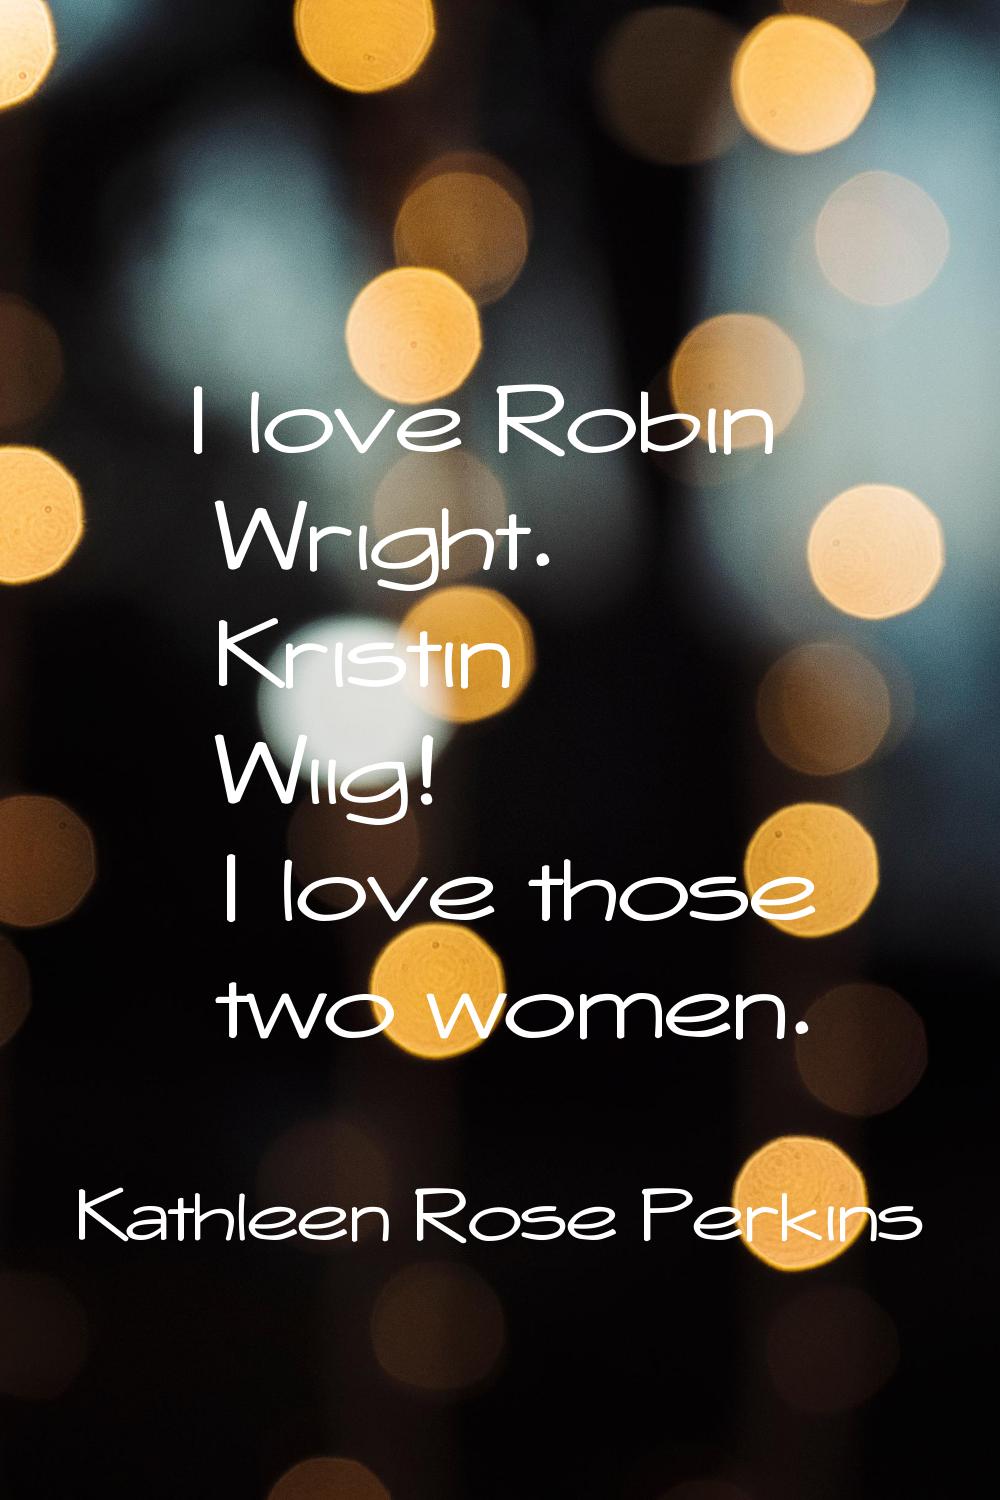 I love Robin Wright. Kristin Wiig! I love those two women.